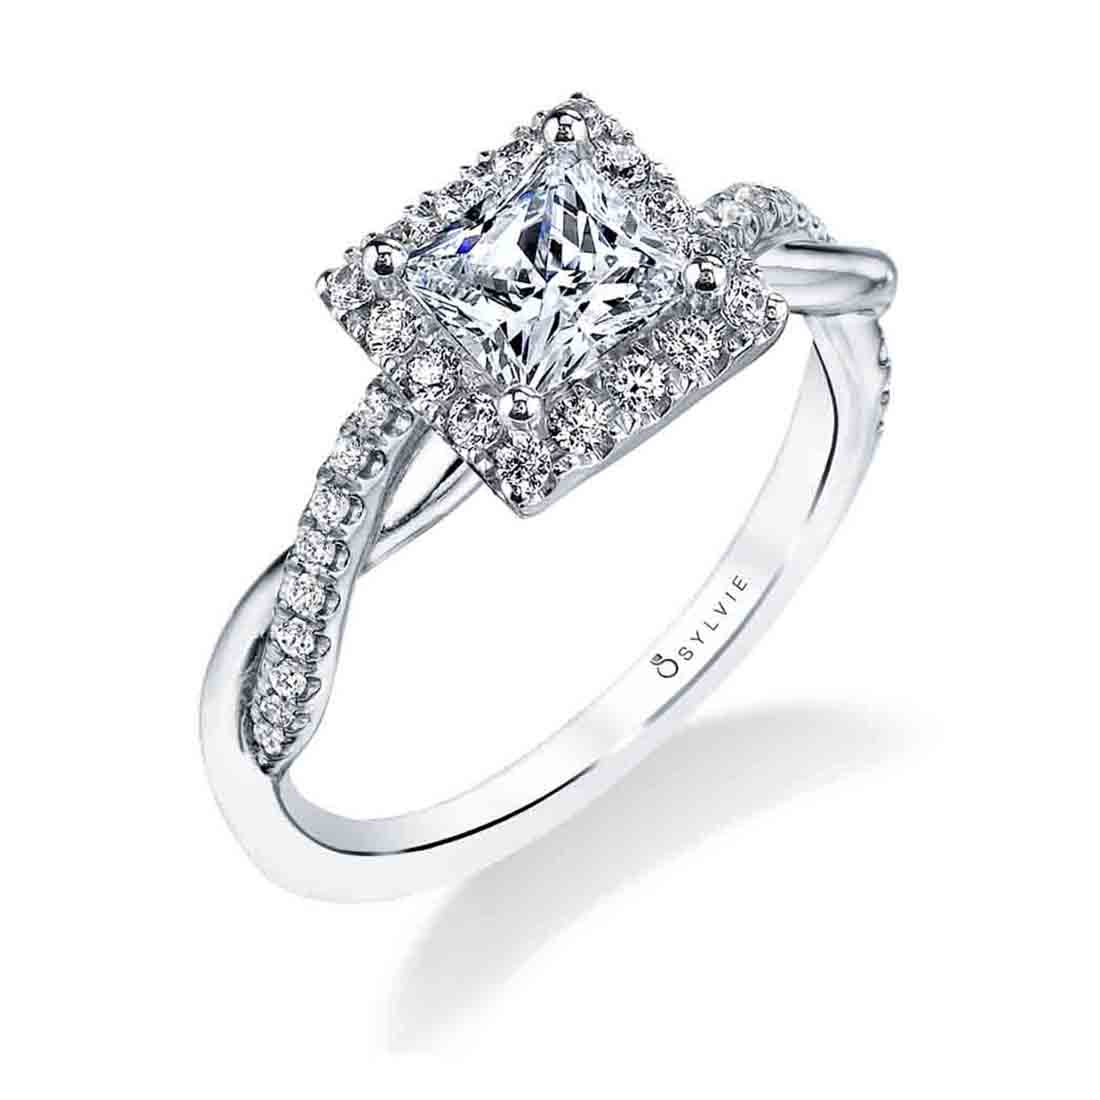 Buy 1.00 Carat Princess Cut Diamond Engagement Ring 14k White Gold, Faint  Yellow Diamond Proposal Ring, Pave Set Halo Engagement Ring Online in India  - Etsy